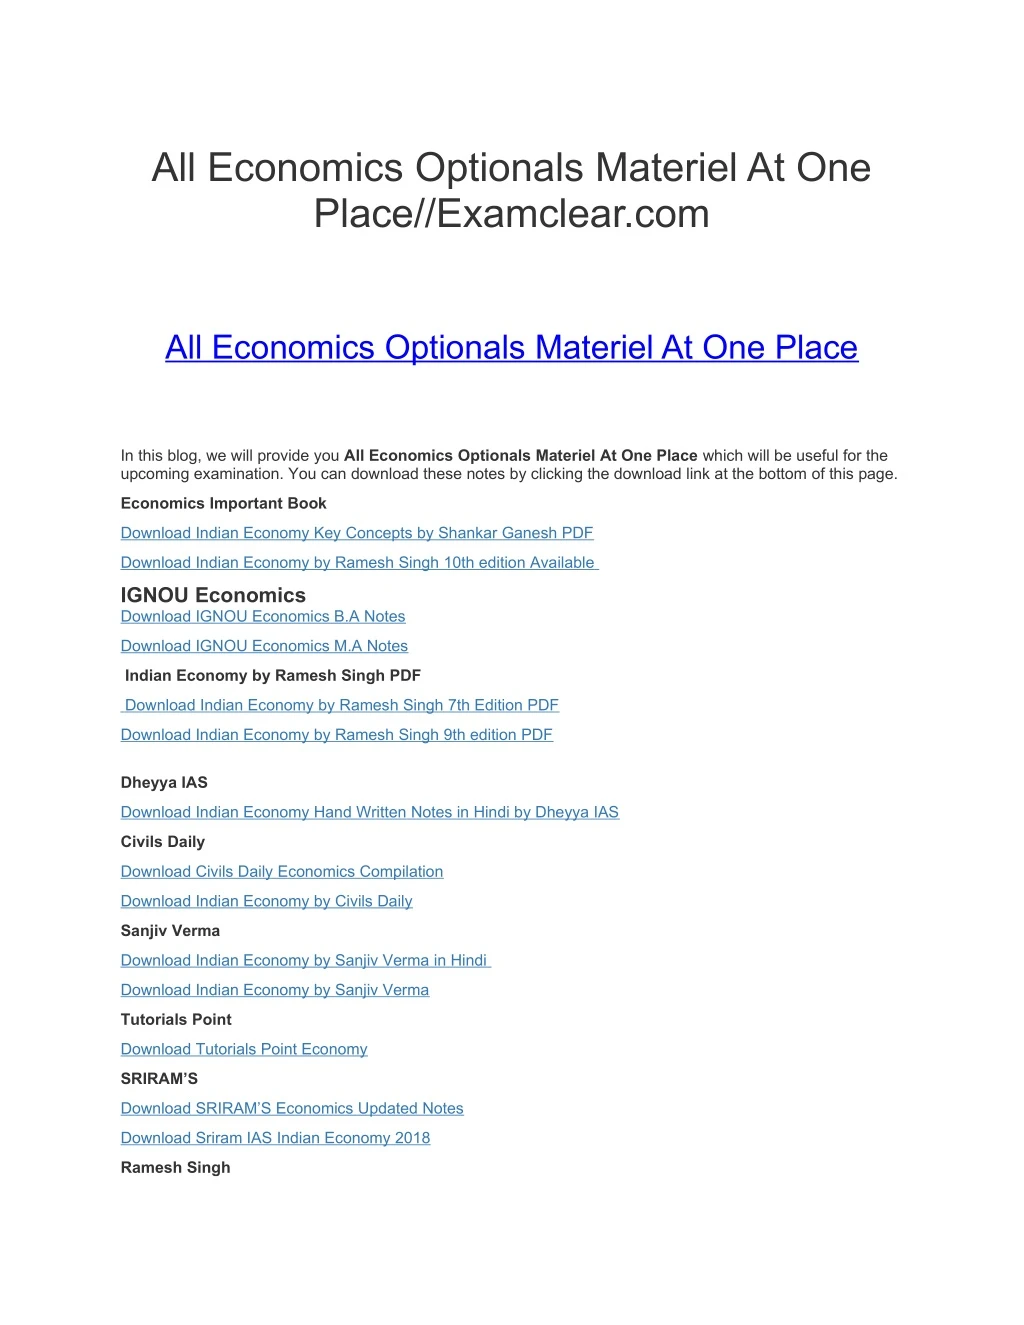 all economics optionals materiel at one place